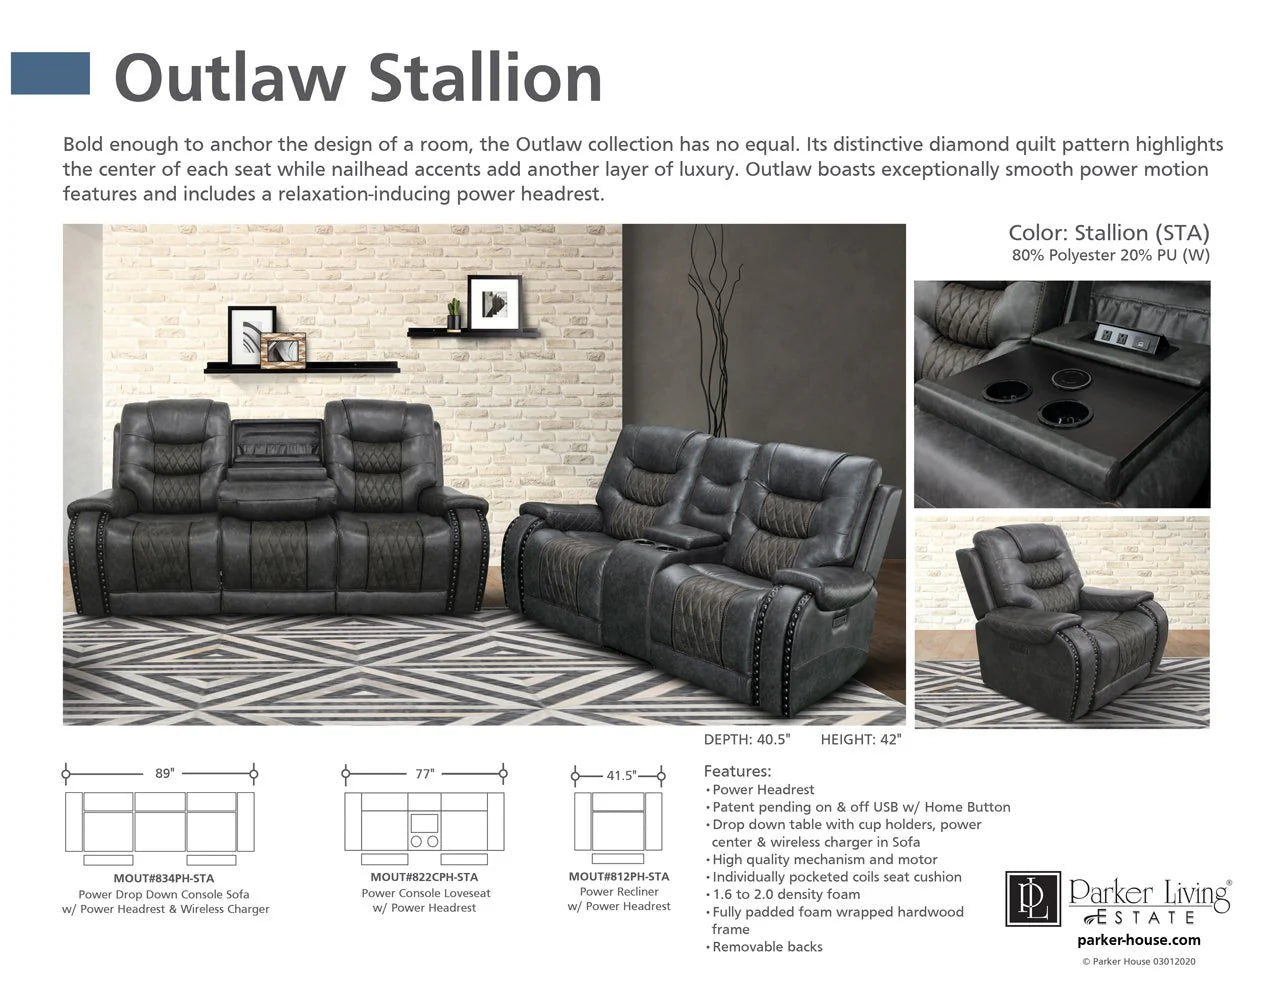 Parker House Outlaw - Stallion Power Drop Down Console Sofa